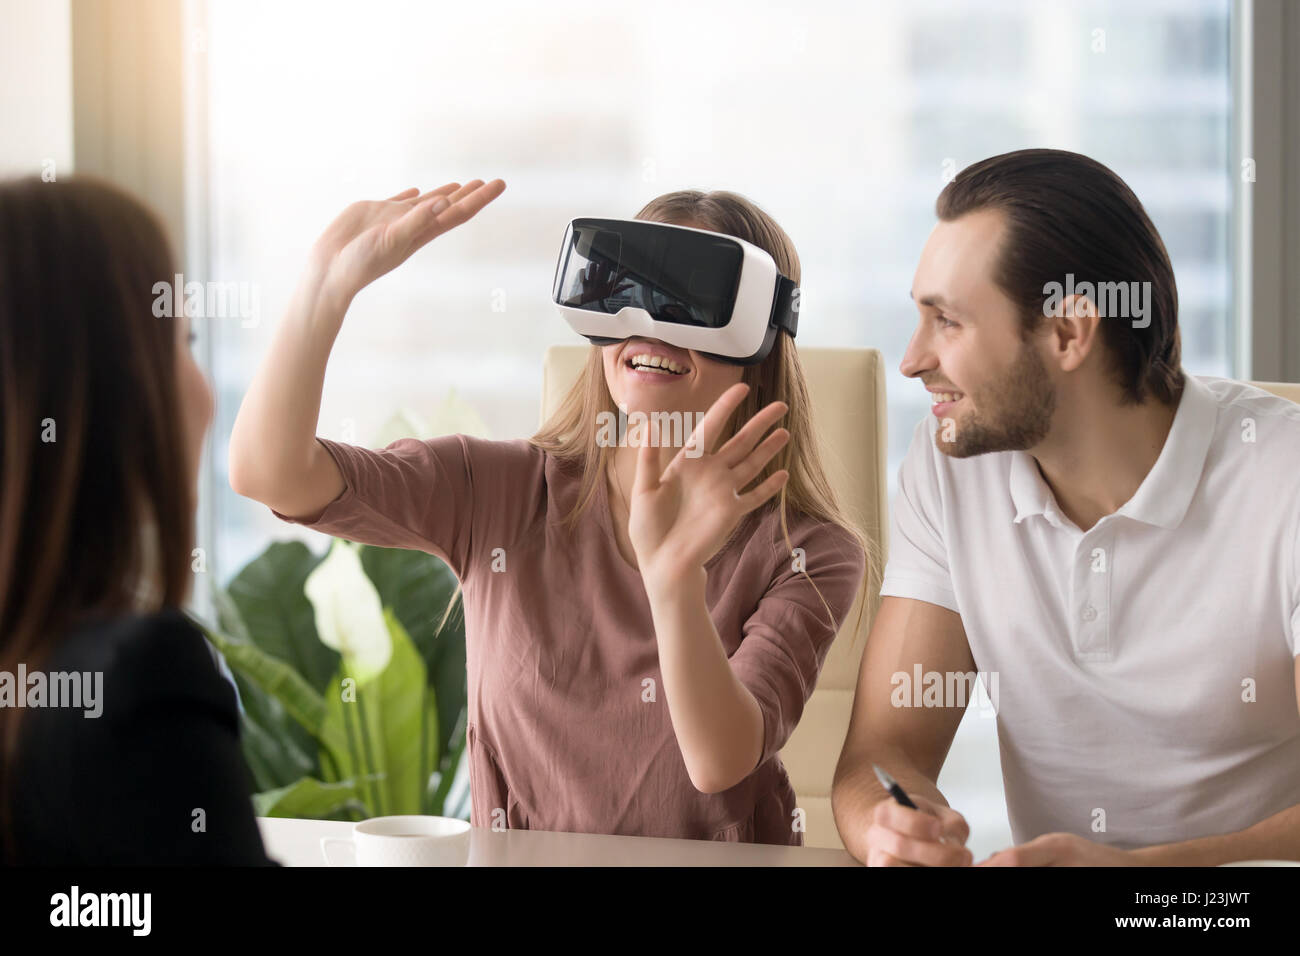 Woman wearing virtual reality headset, team developing VR glasse Stock Photo